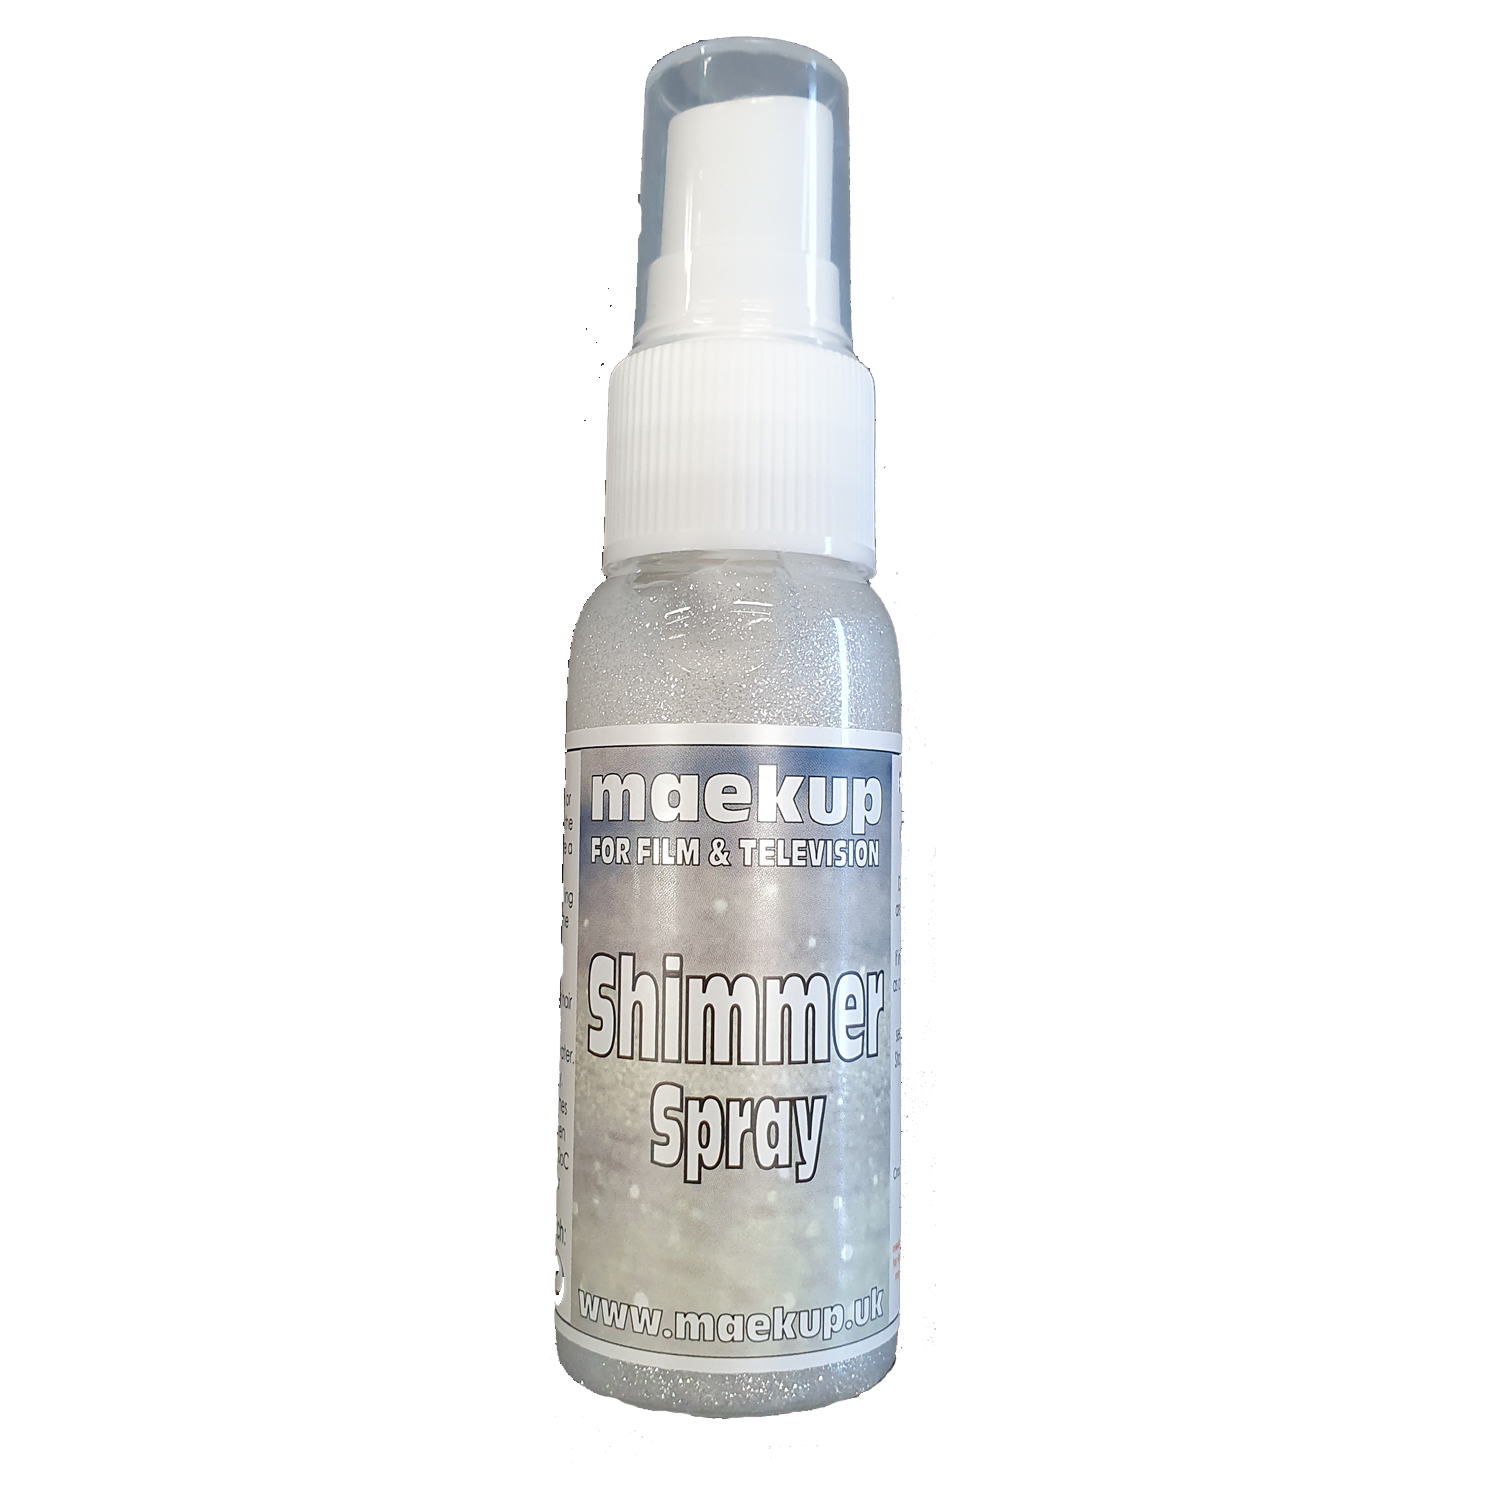 Maekup Shimmer Spray, 30ml